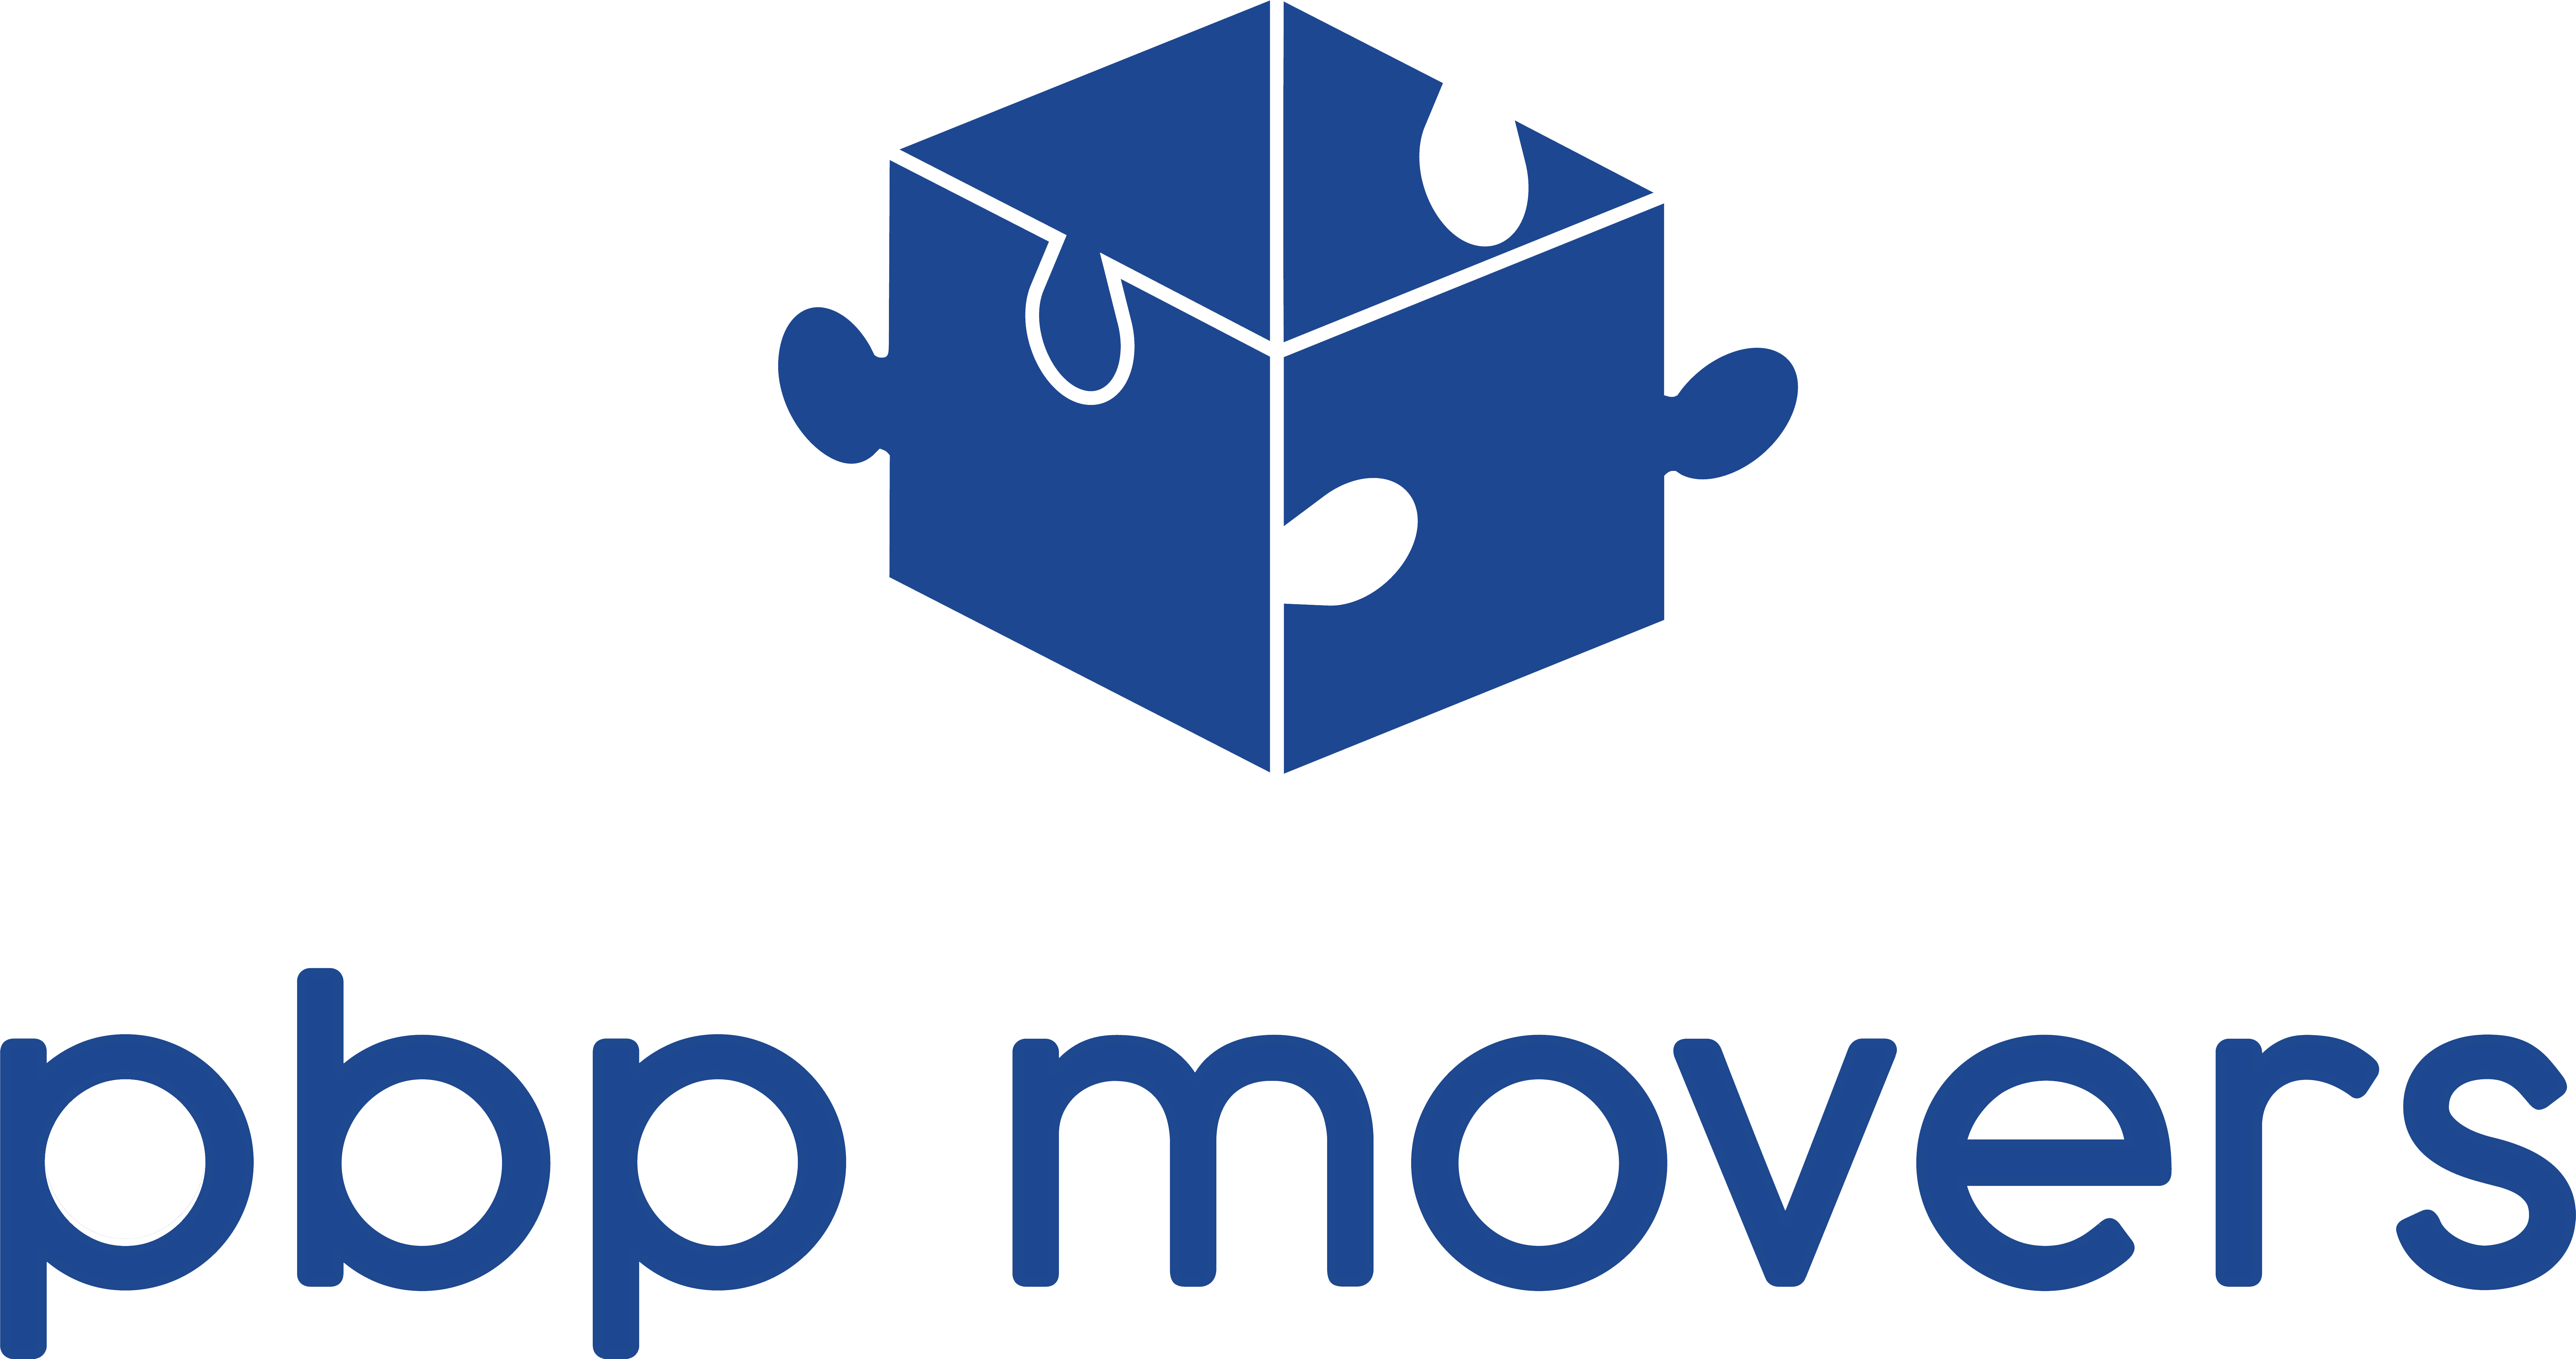 pbp movers logo transparent